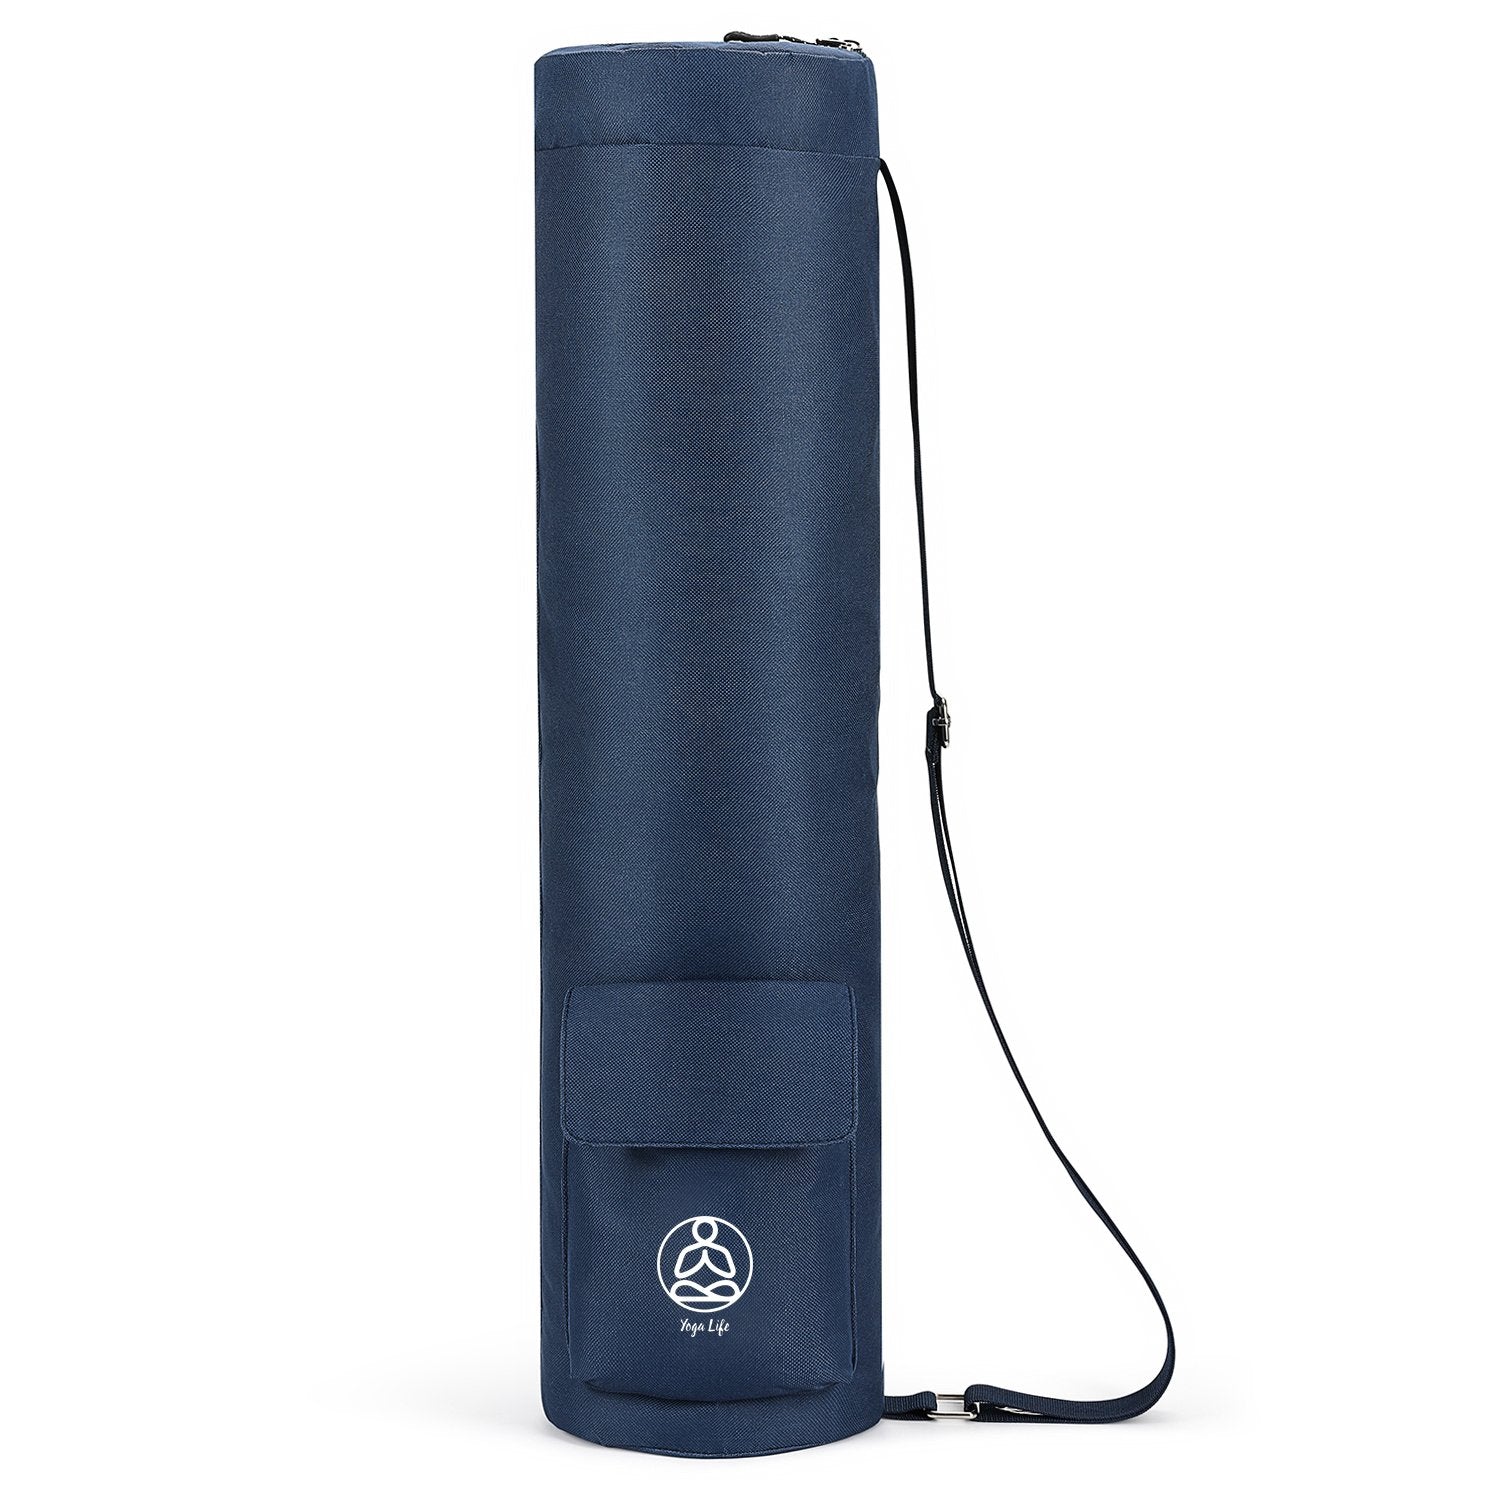 Gaiam Yoga Mat Bag Full Zip Cargo Yoga Mat Carrier Bag Adjustable Strap,  Front & Back Pockets (25L x 6 Diameter) Niagara